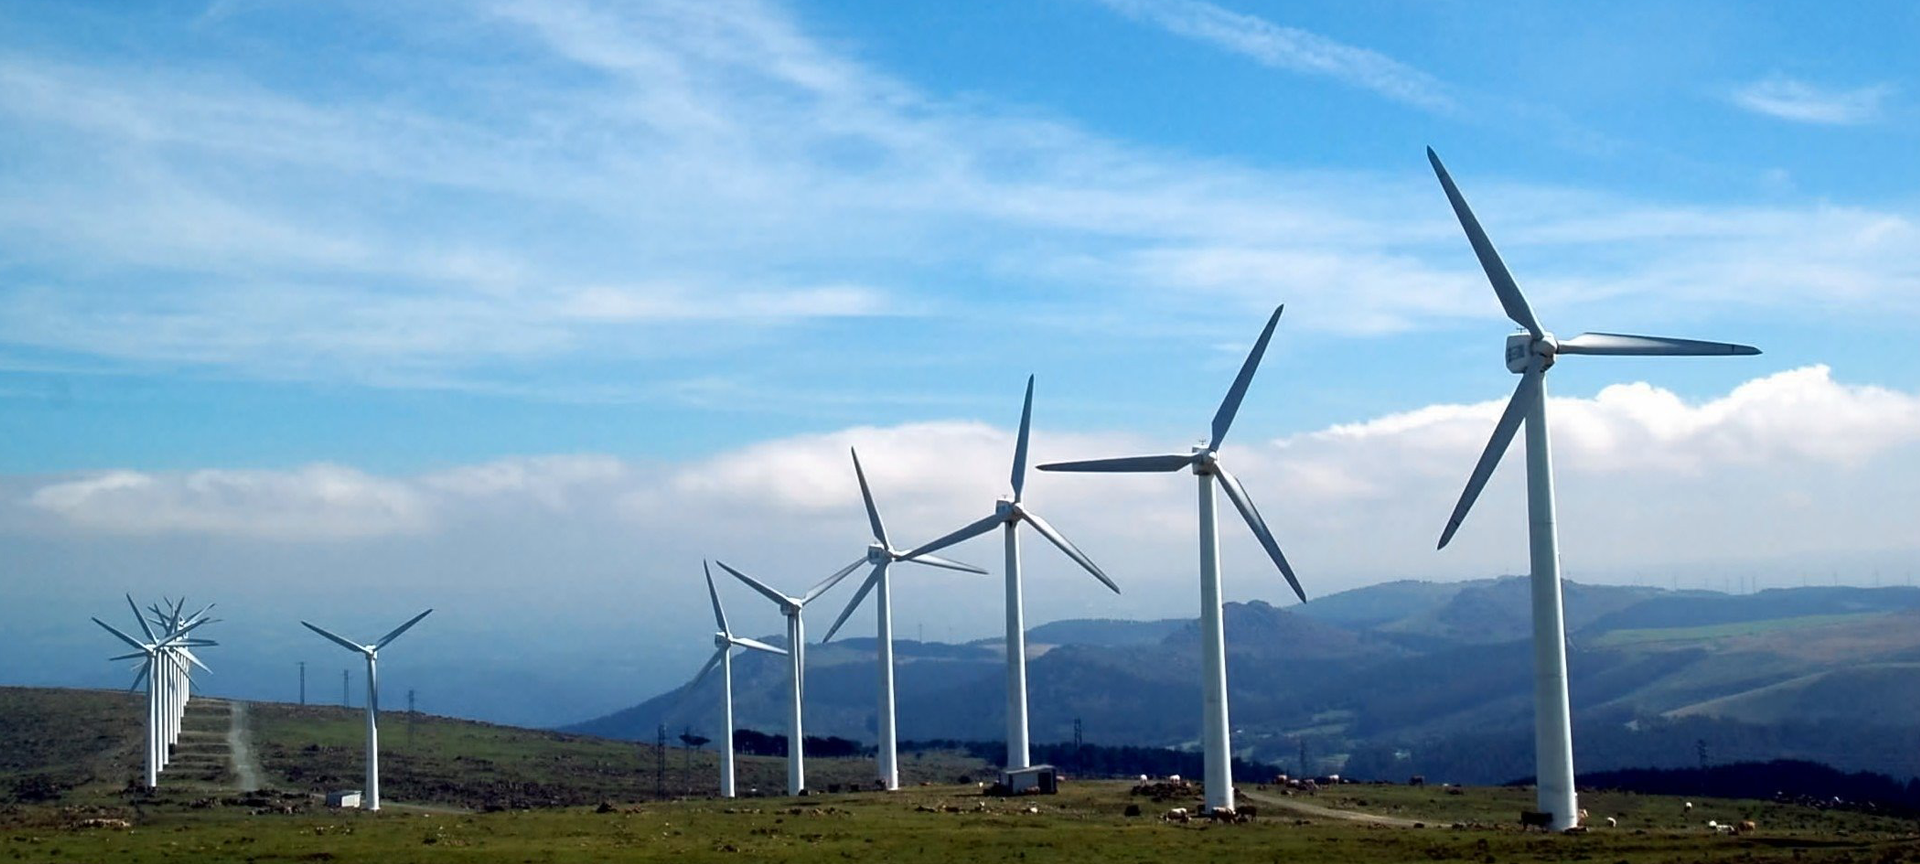 Renewable energy powers sustainable communities